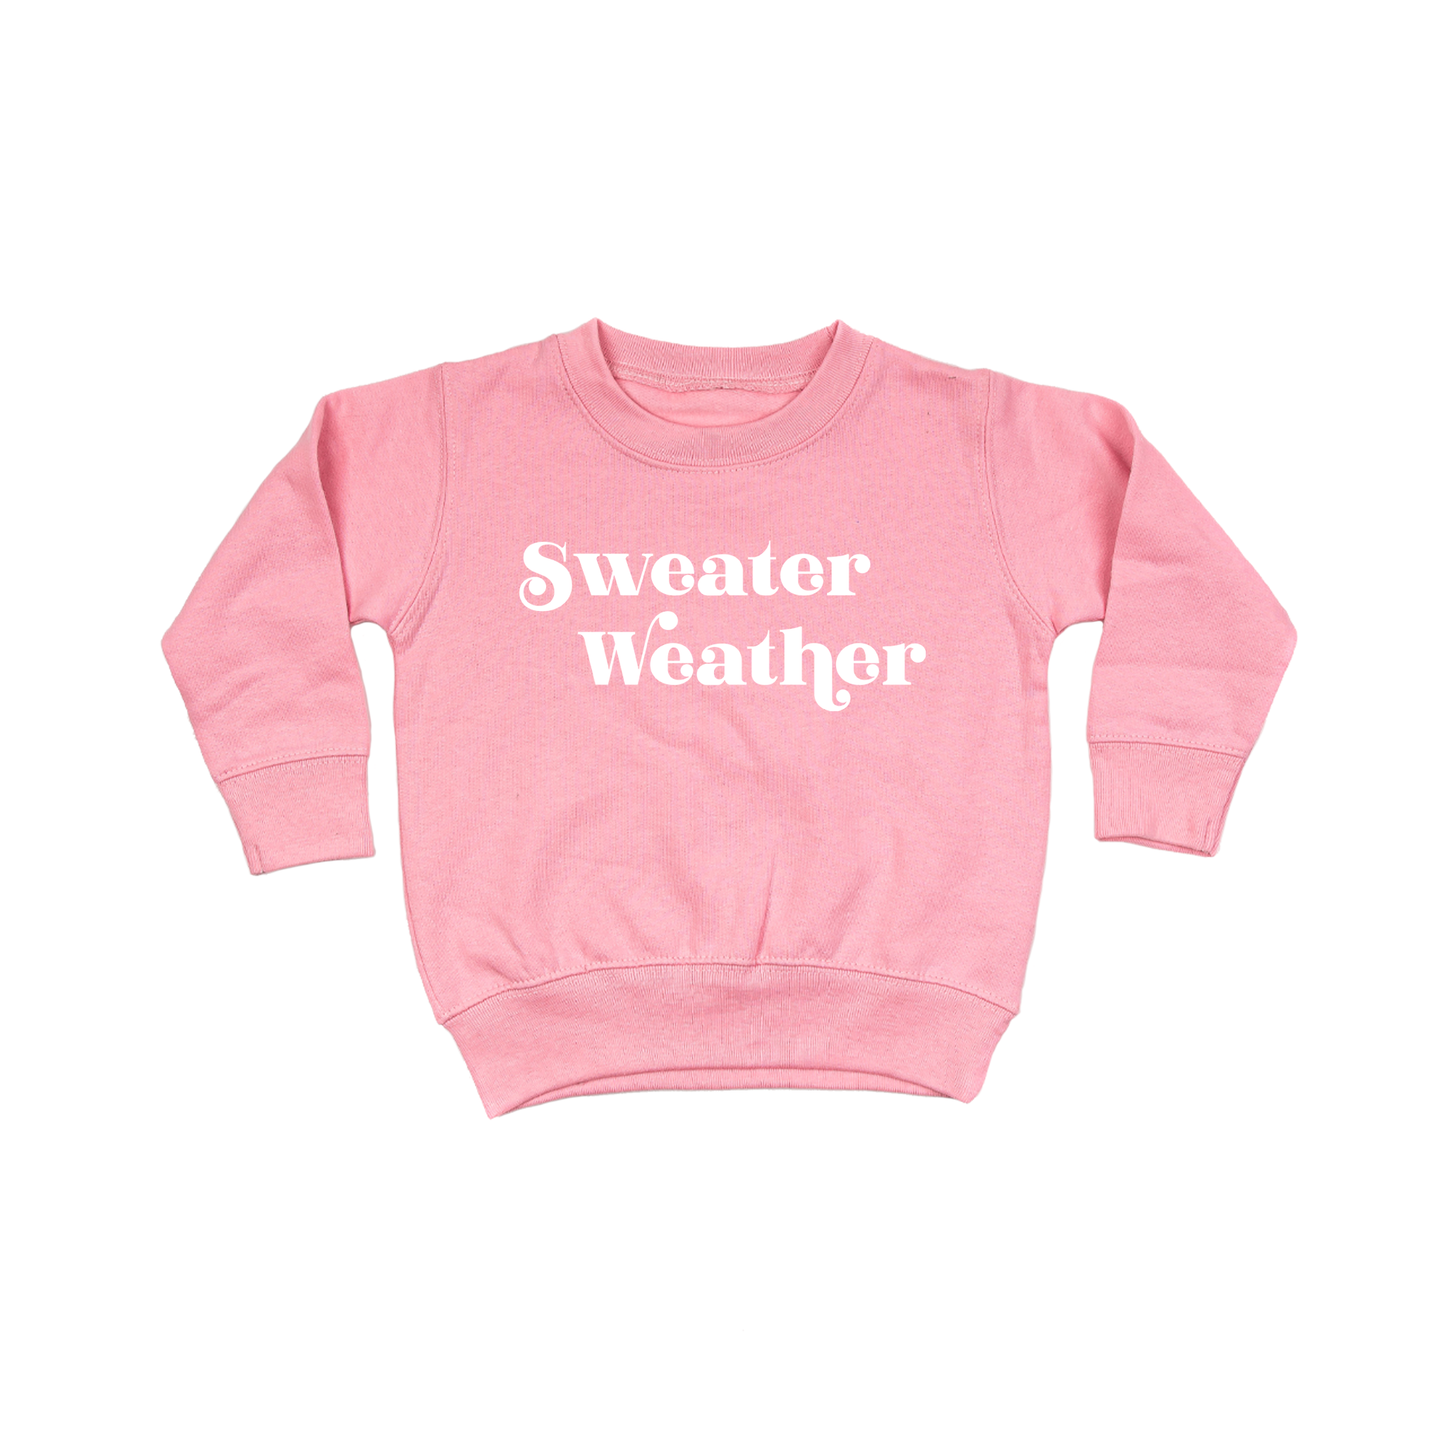 Sweater Weather (White) - Kids Sweatshirt (Pink)